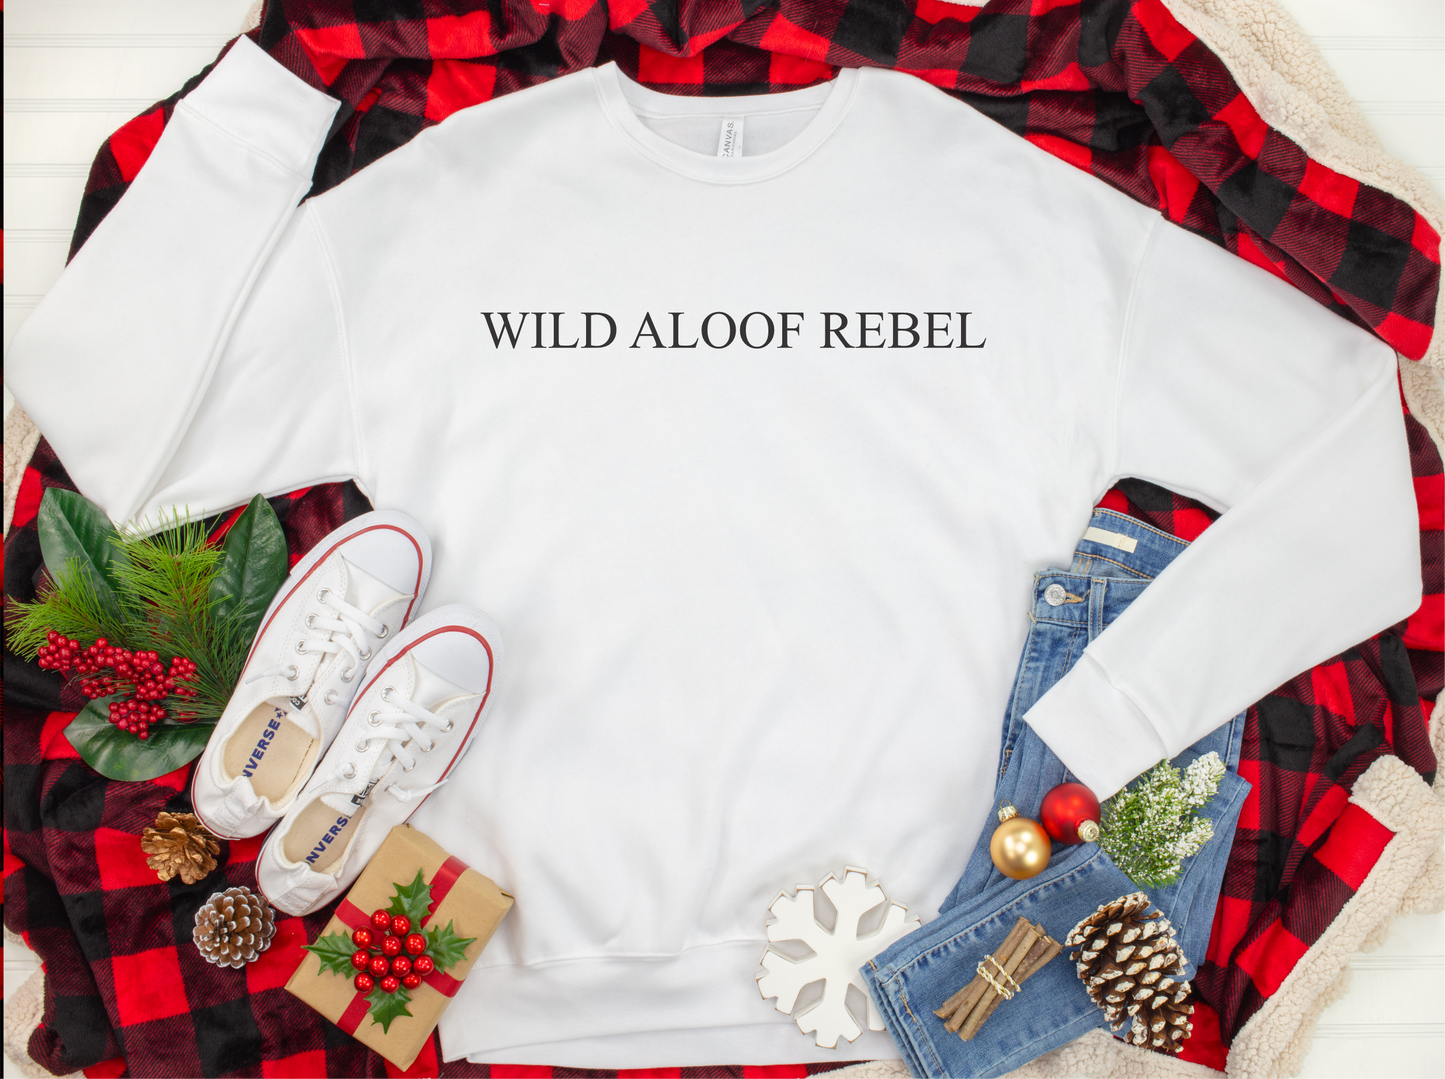 Wild Aloof Rebel Sweatshirt Unisex from David Rose / Aloof Rebel Sweatshirt / ICON / Wild aloof rebel shirt